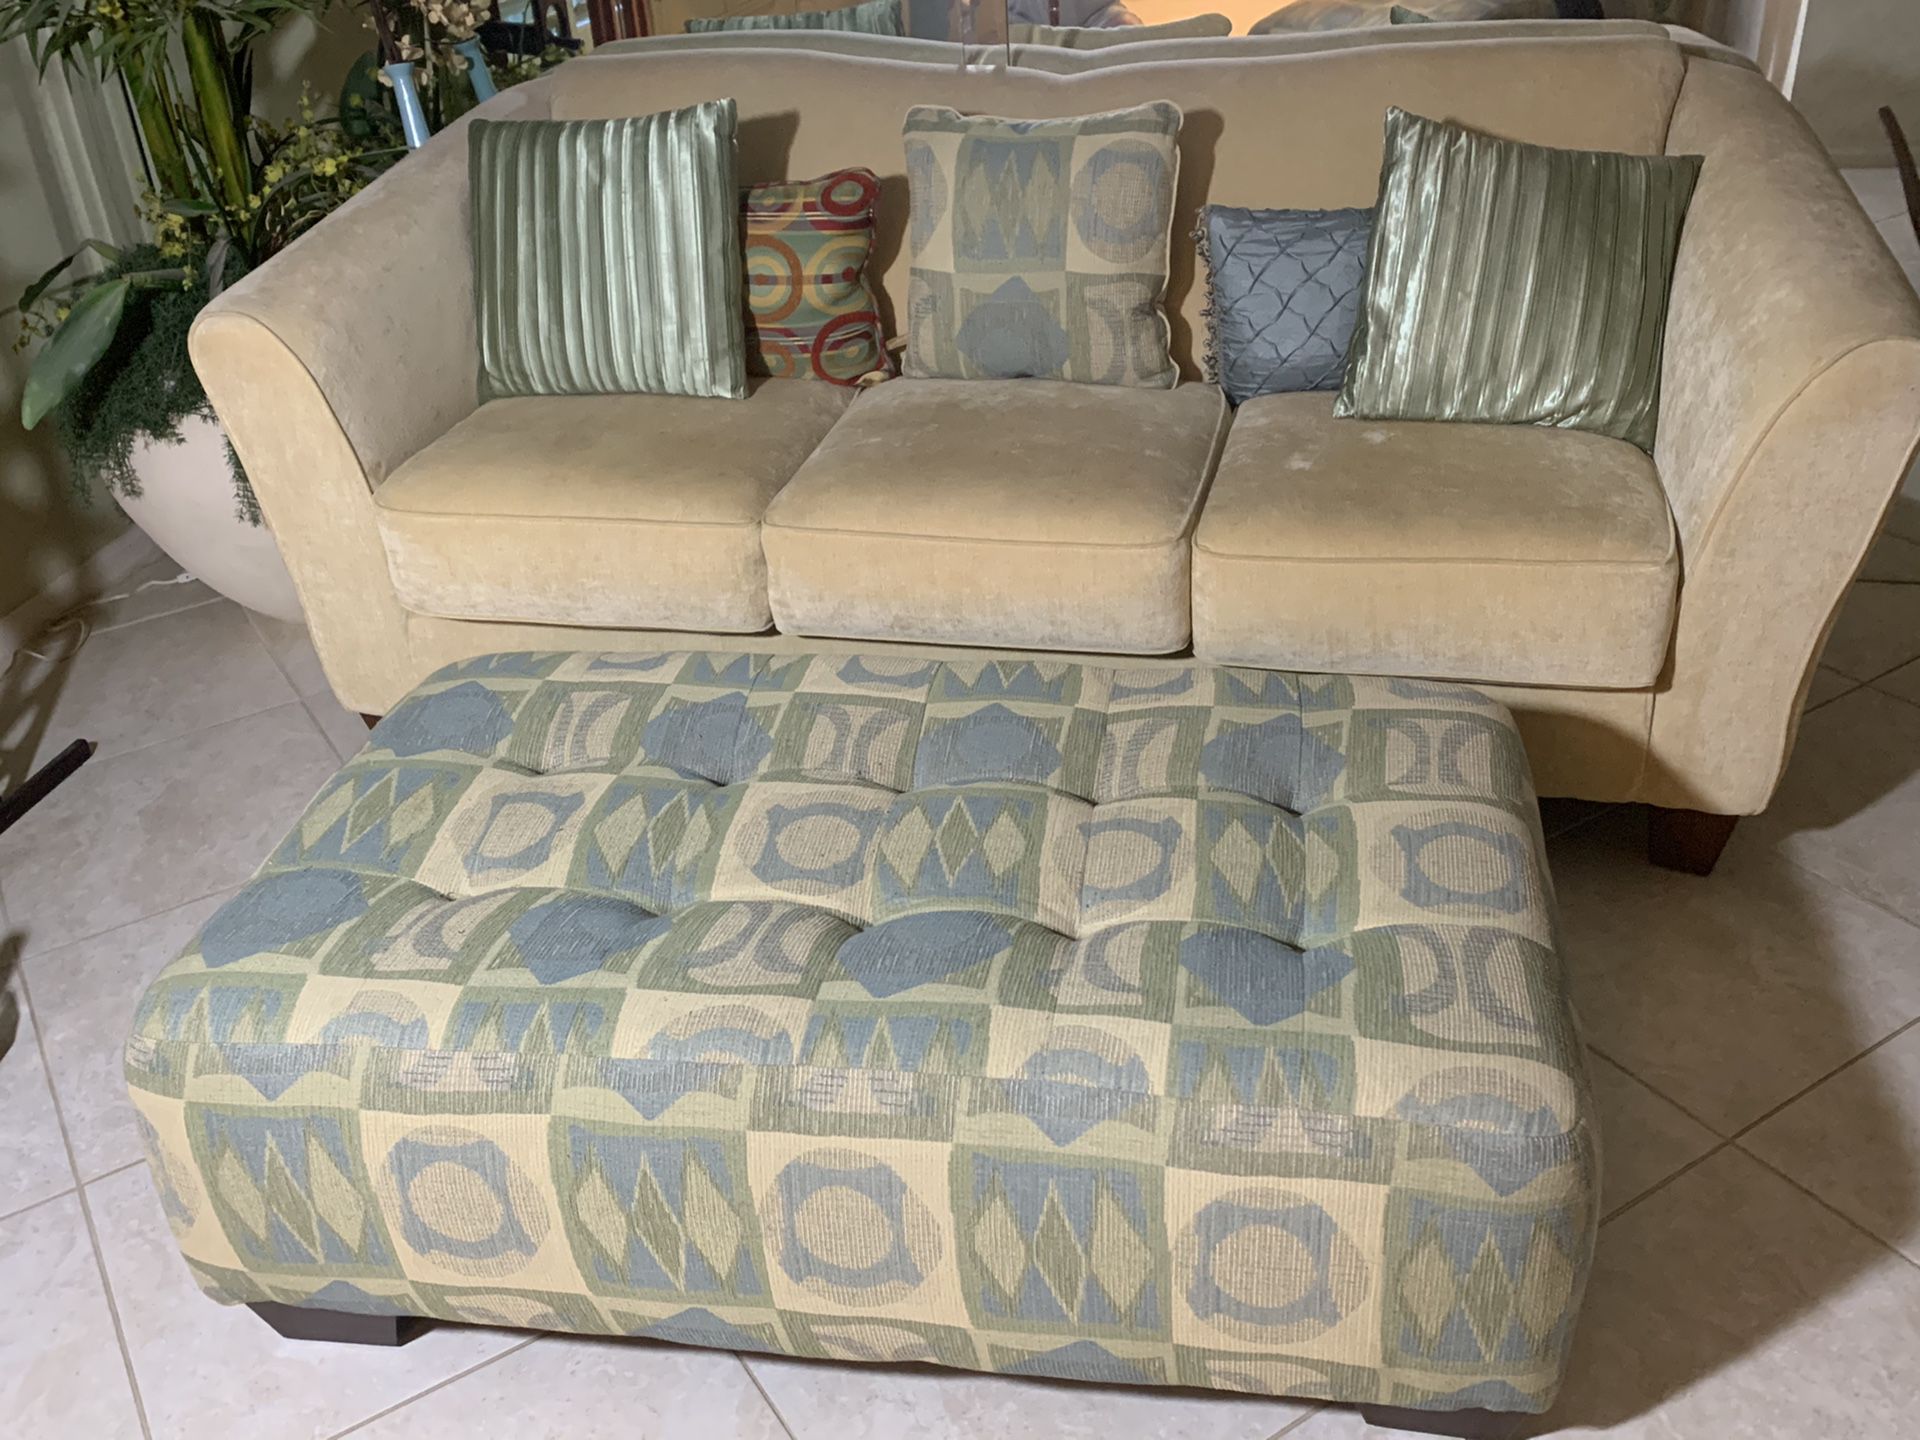 Modern sofa, ottoman and chaise lounger